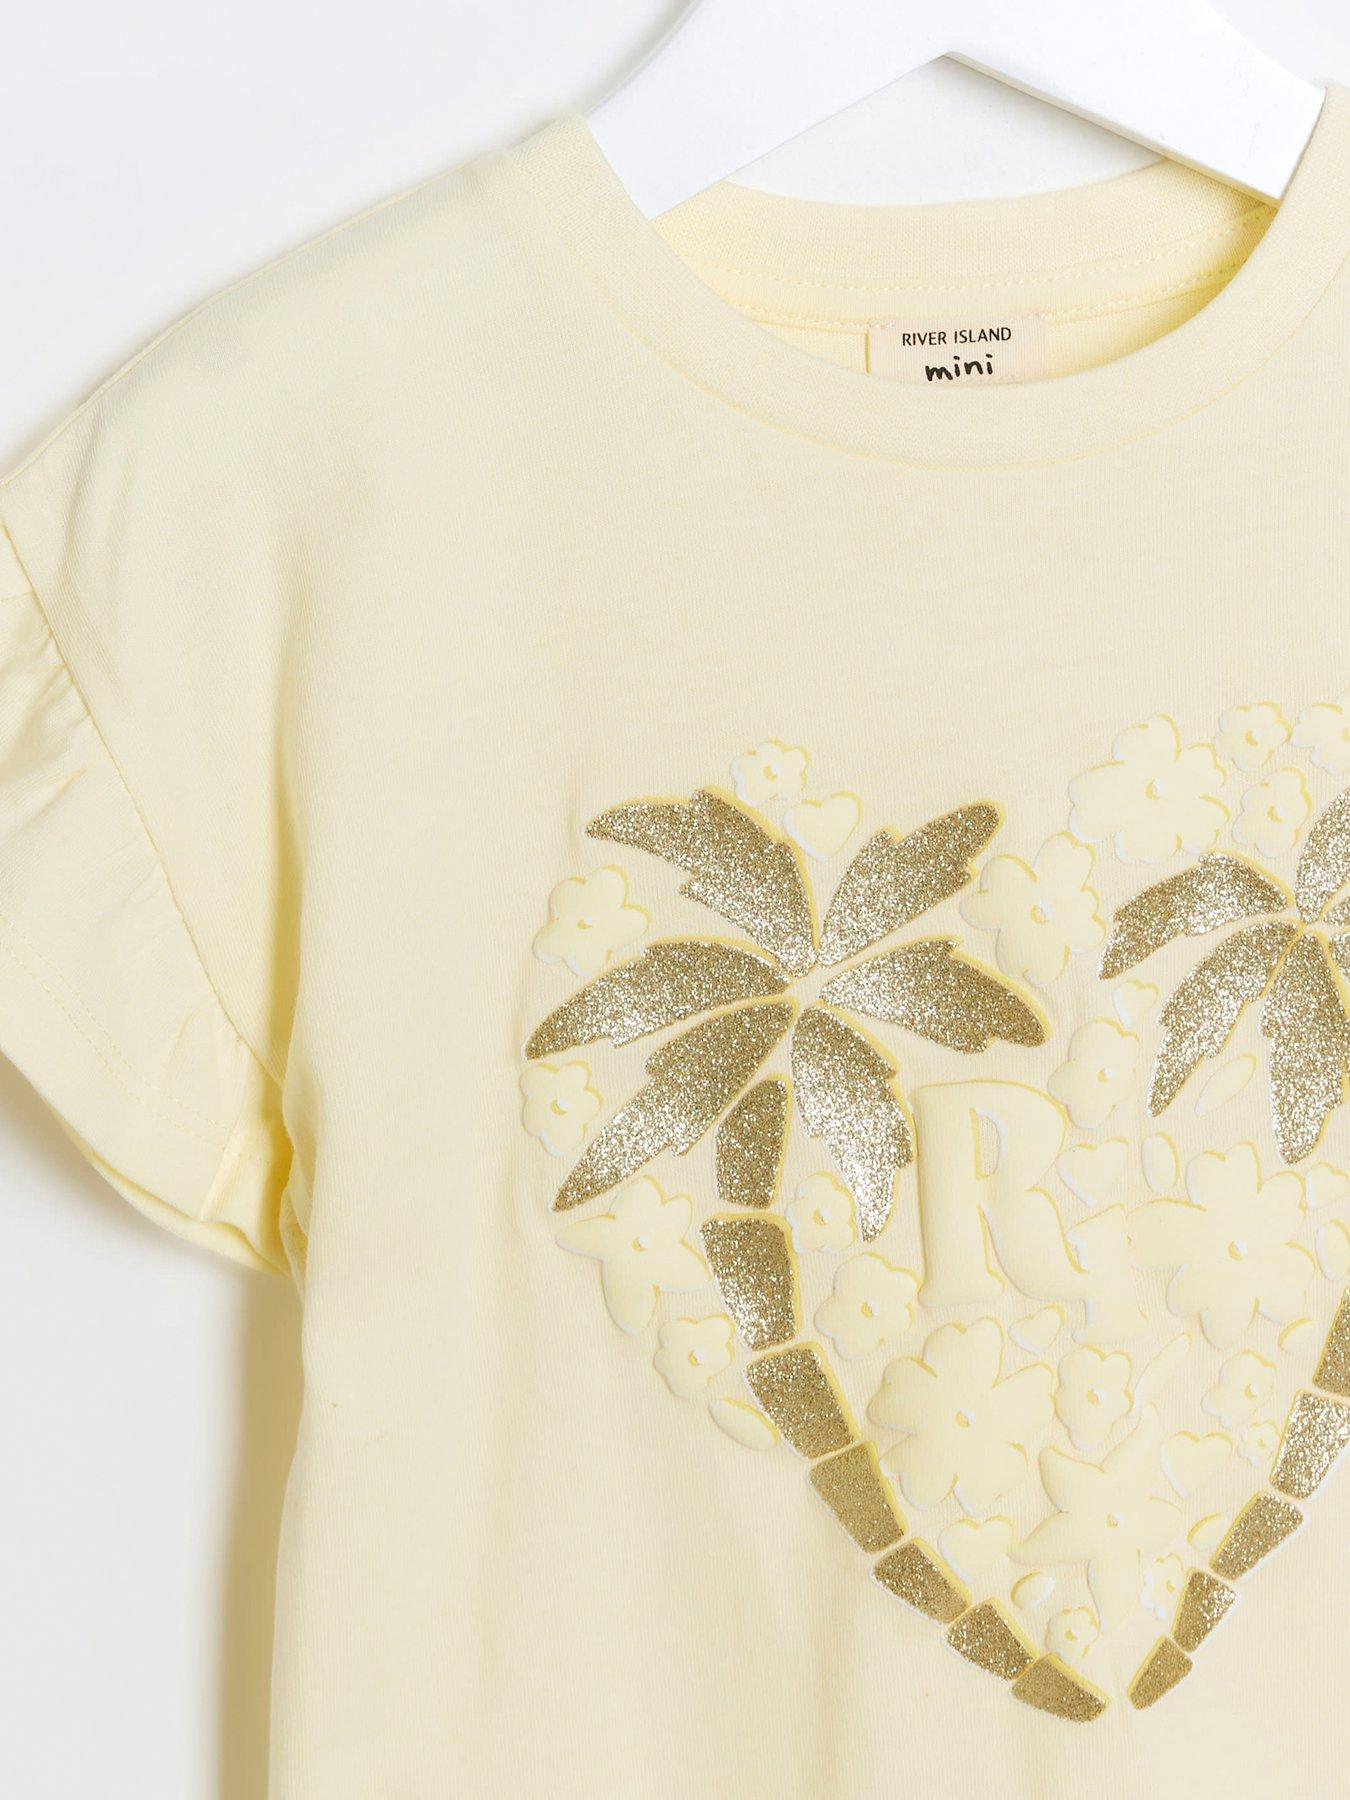 River Island Mini Mini Girls Graphic Print T-shirt - Yellow | Very.co.uk